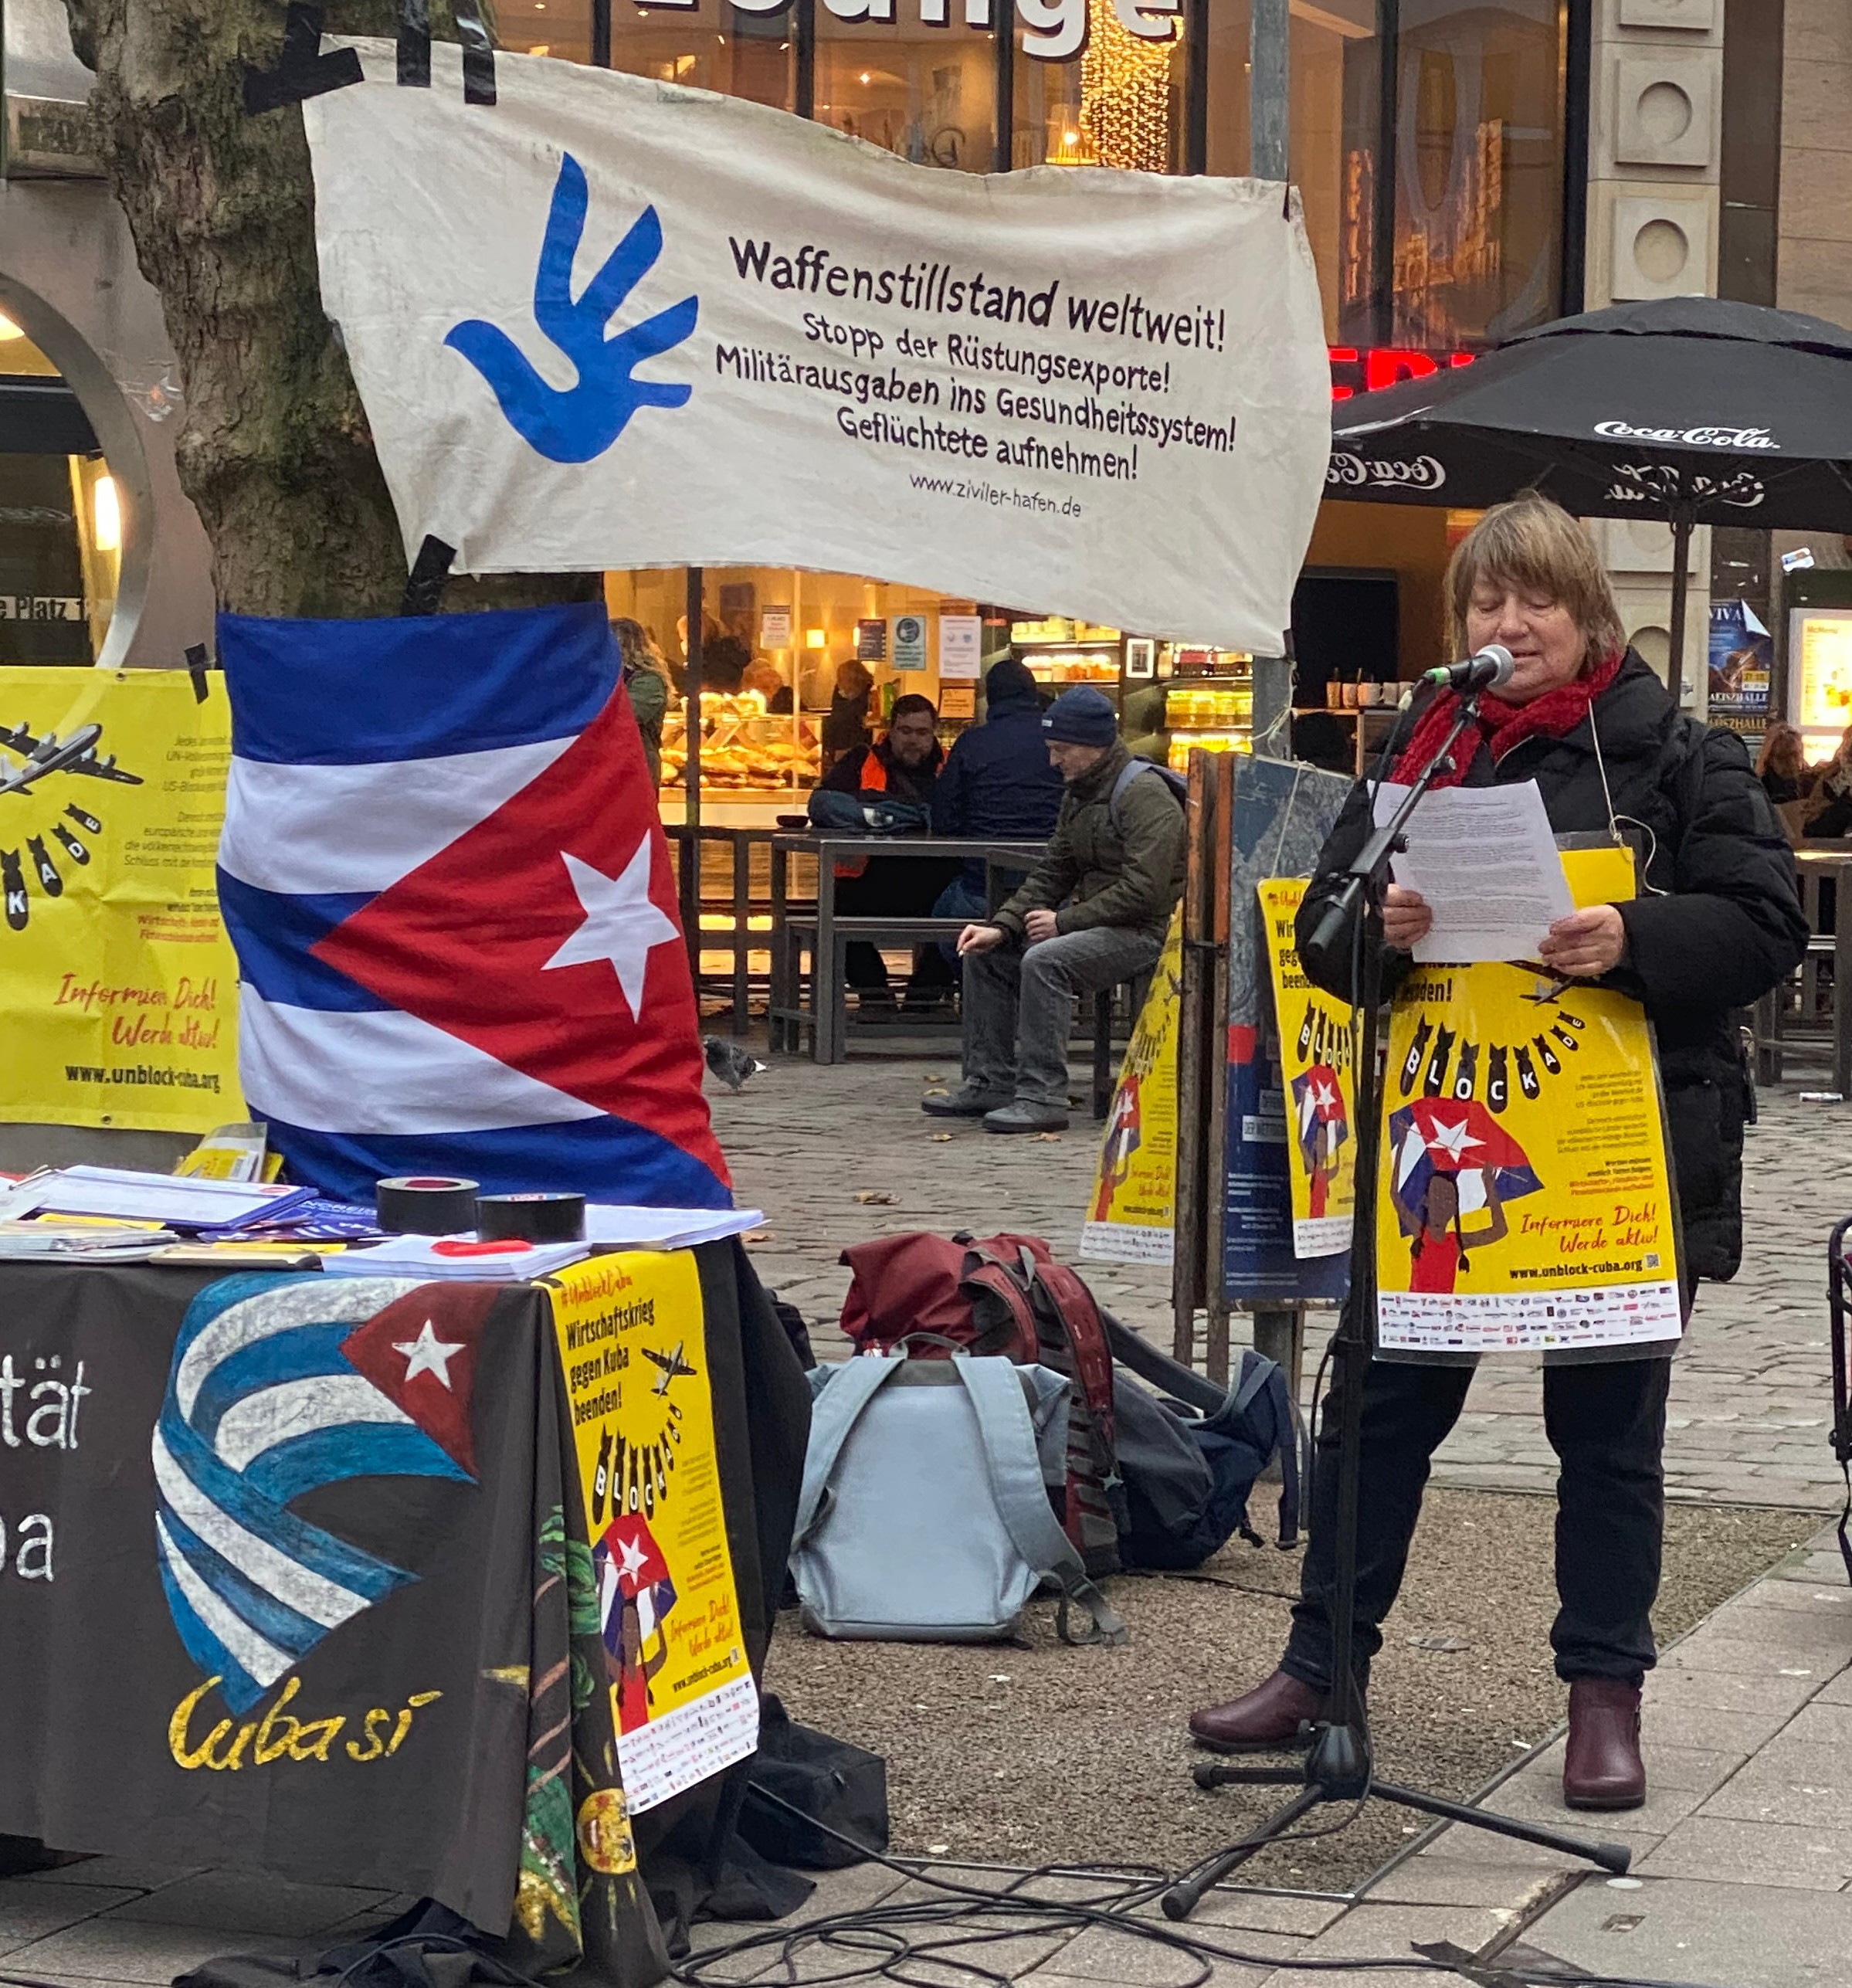 Cuba Si: "Hände weg von Kuba" am 15.11. in Hamburg